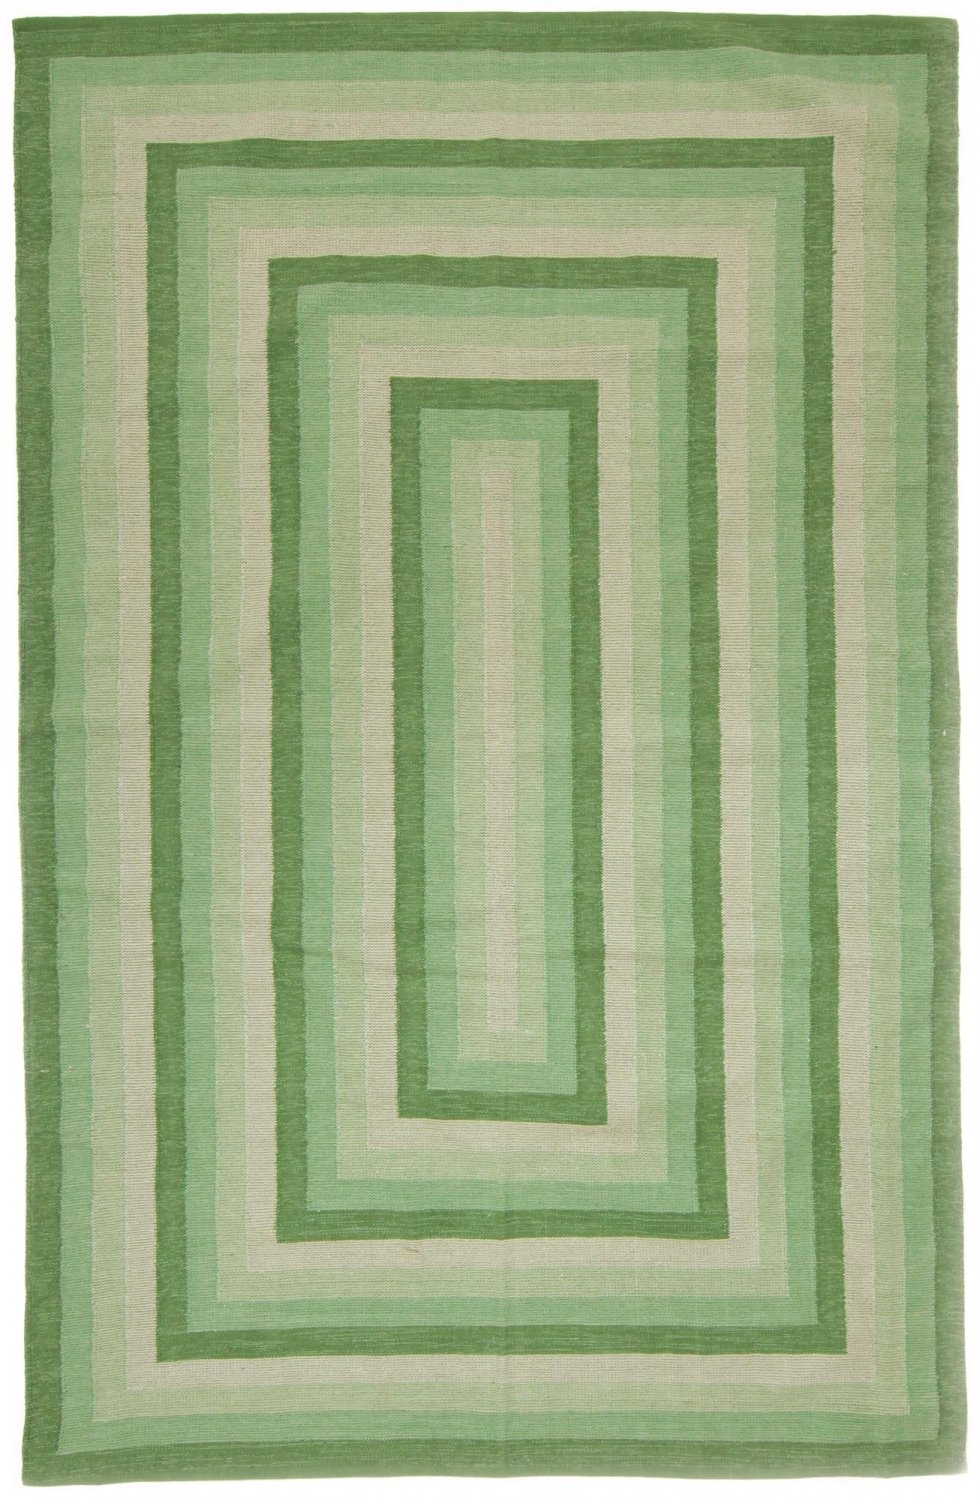 Kludetæppe - Chania (grøn)